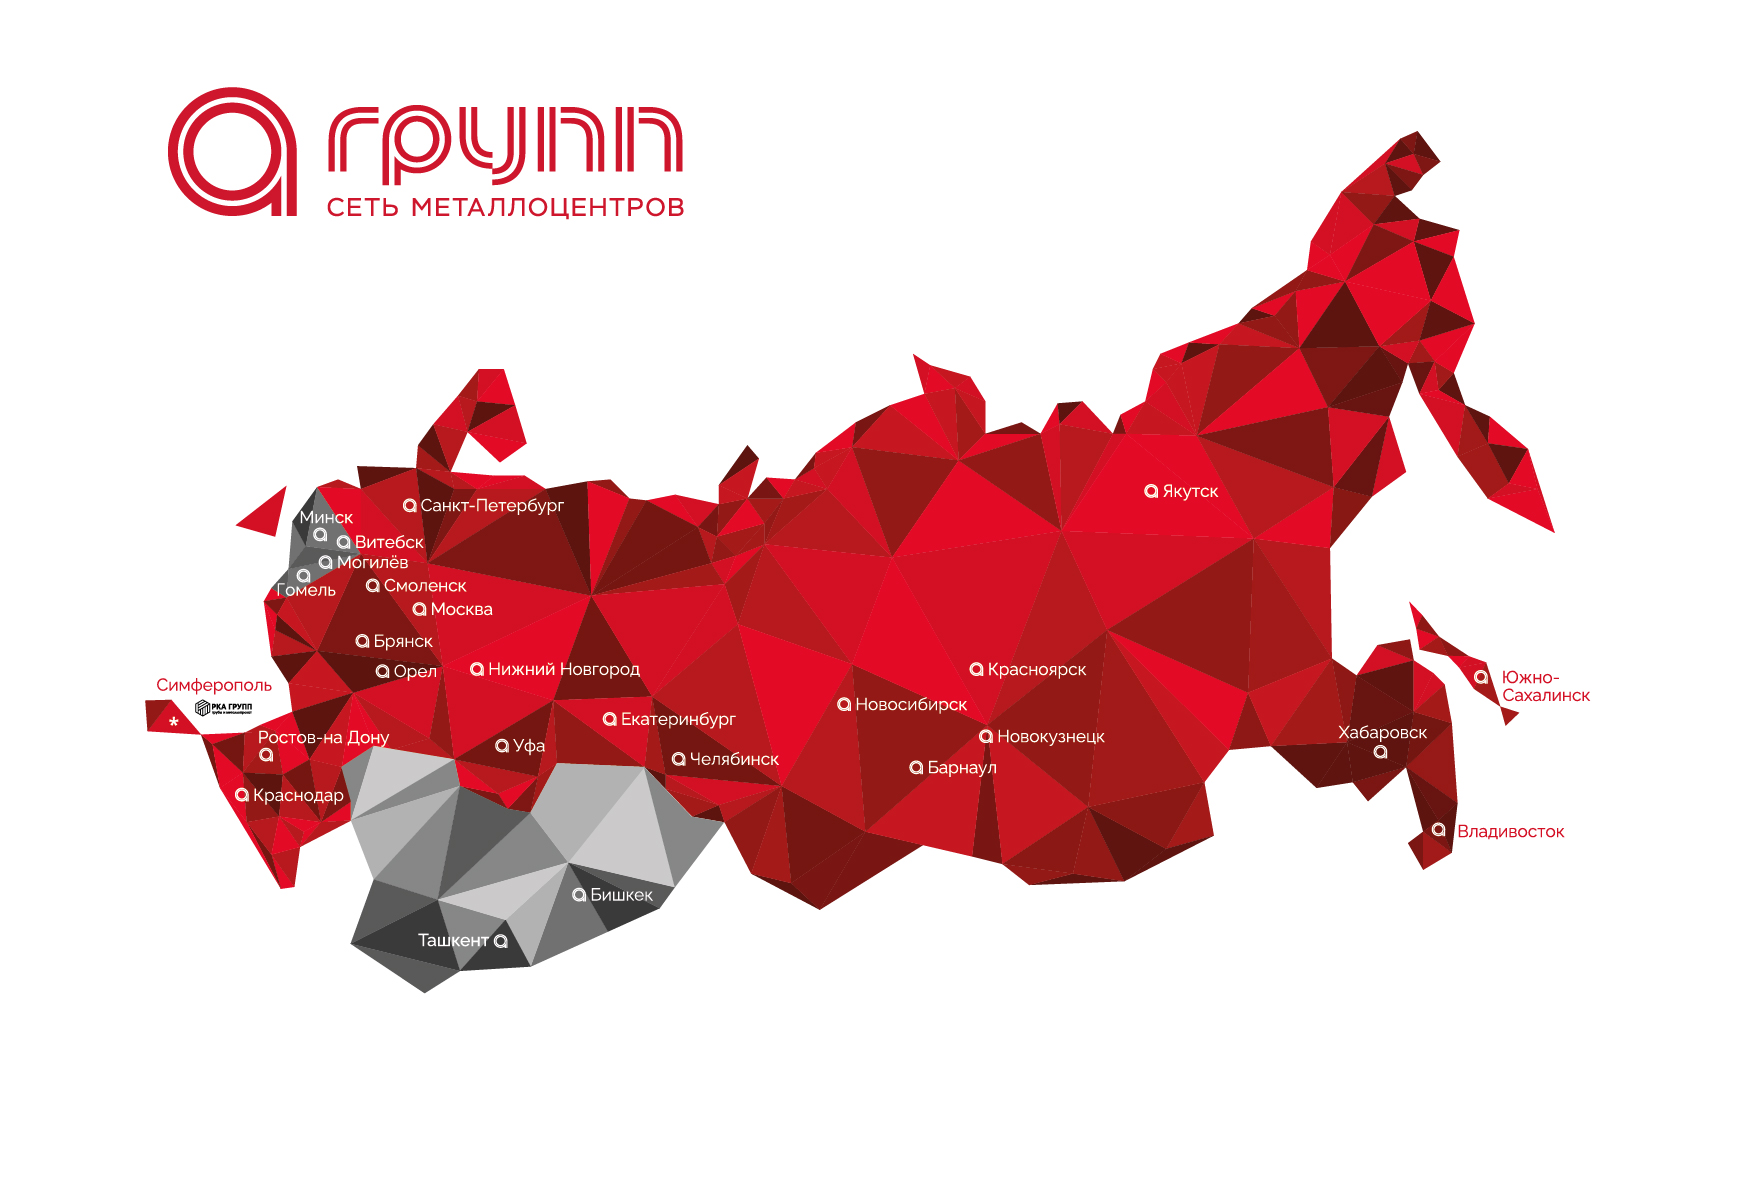 Карта сети металлоцентров А ГРУПП